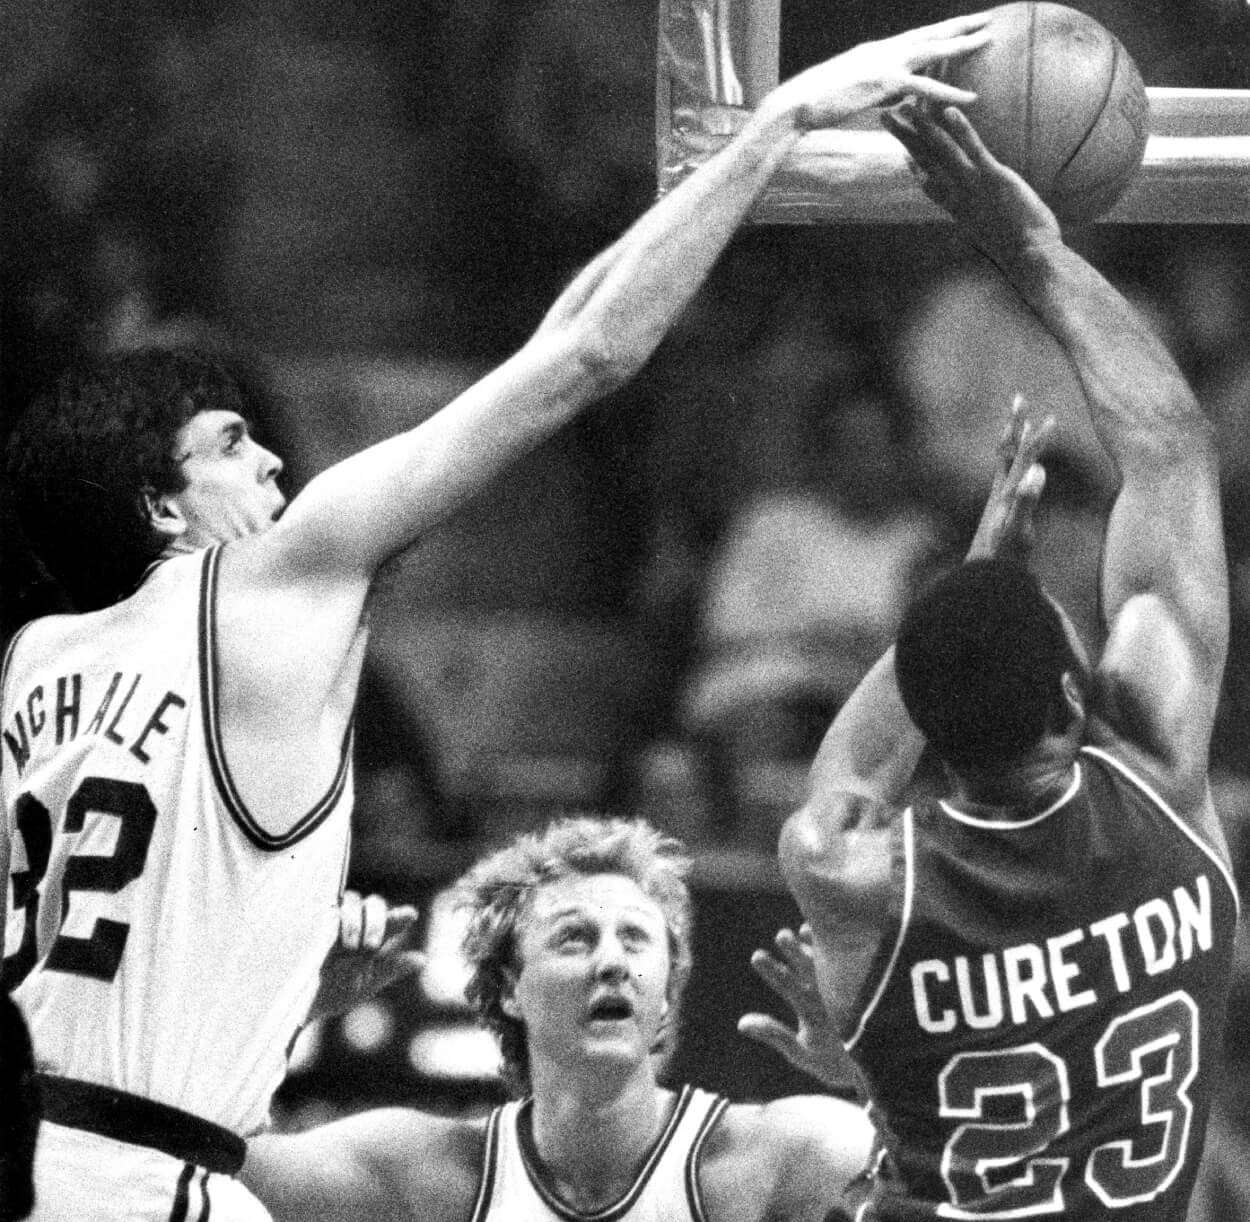 Boston Celtics forward Kevin McHale blocks a shot by Detroit's Earl Cureton, with Boston's Larry Bird between them.